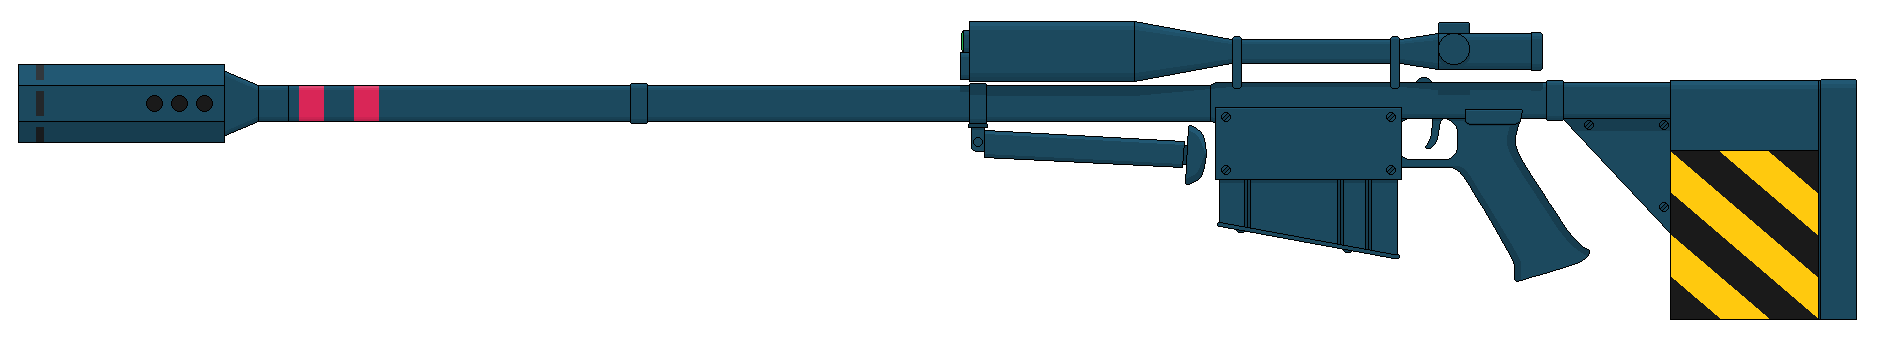 Yoko Littner Gun